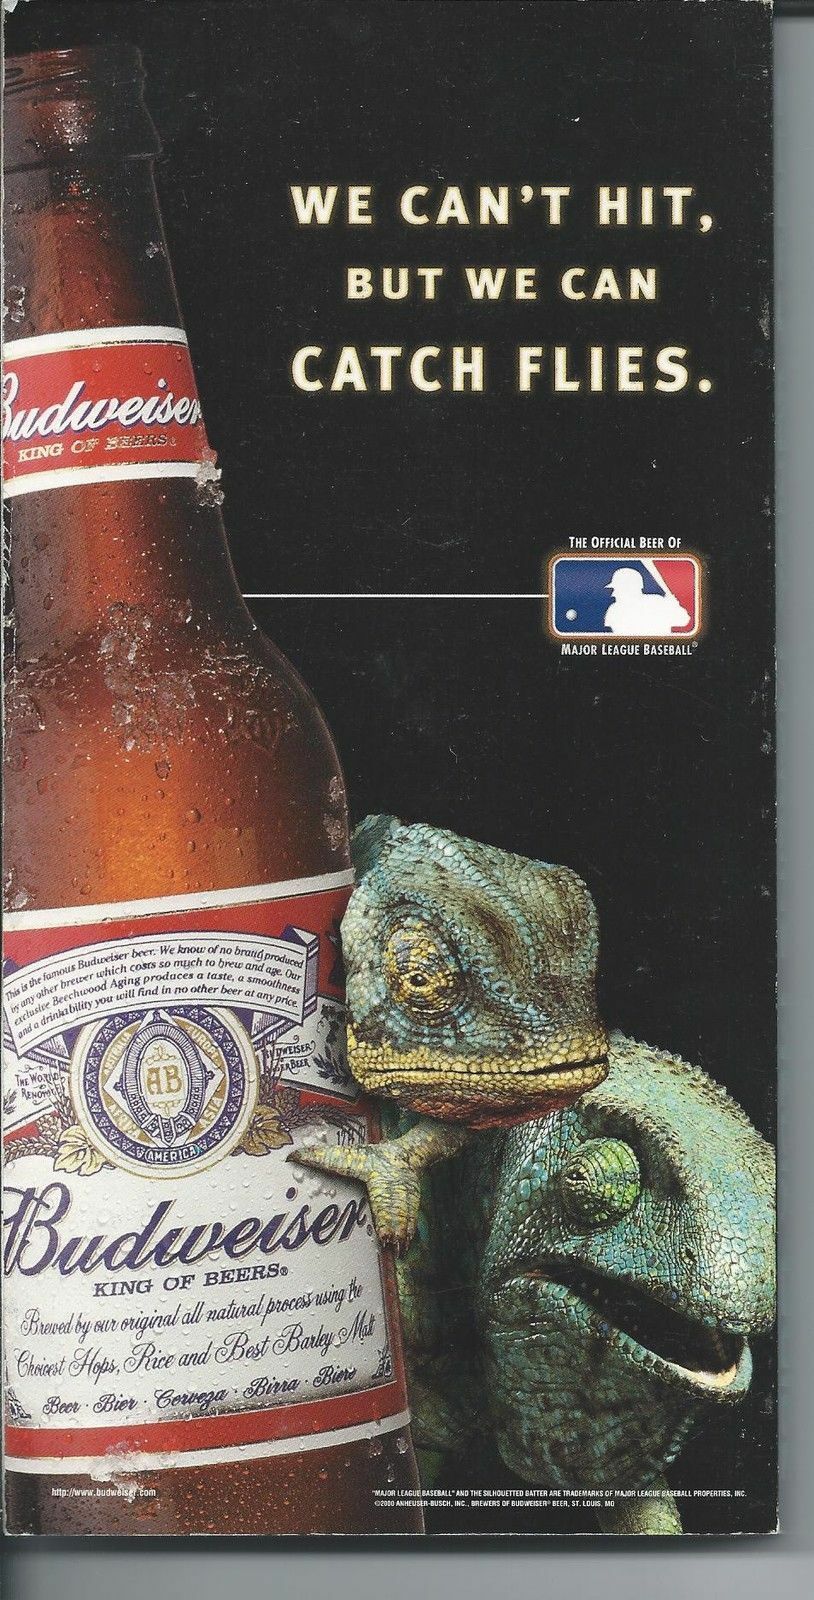 2000 Florida Marlins MLB Media Guide - Preston Wilson cover Image 2